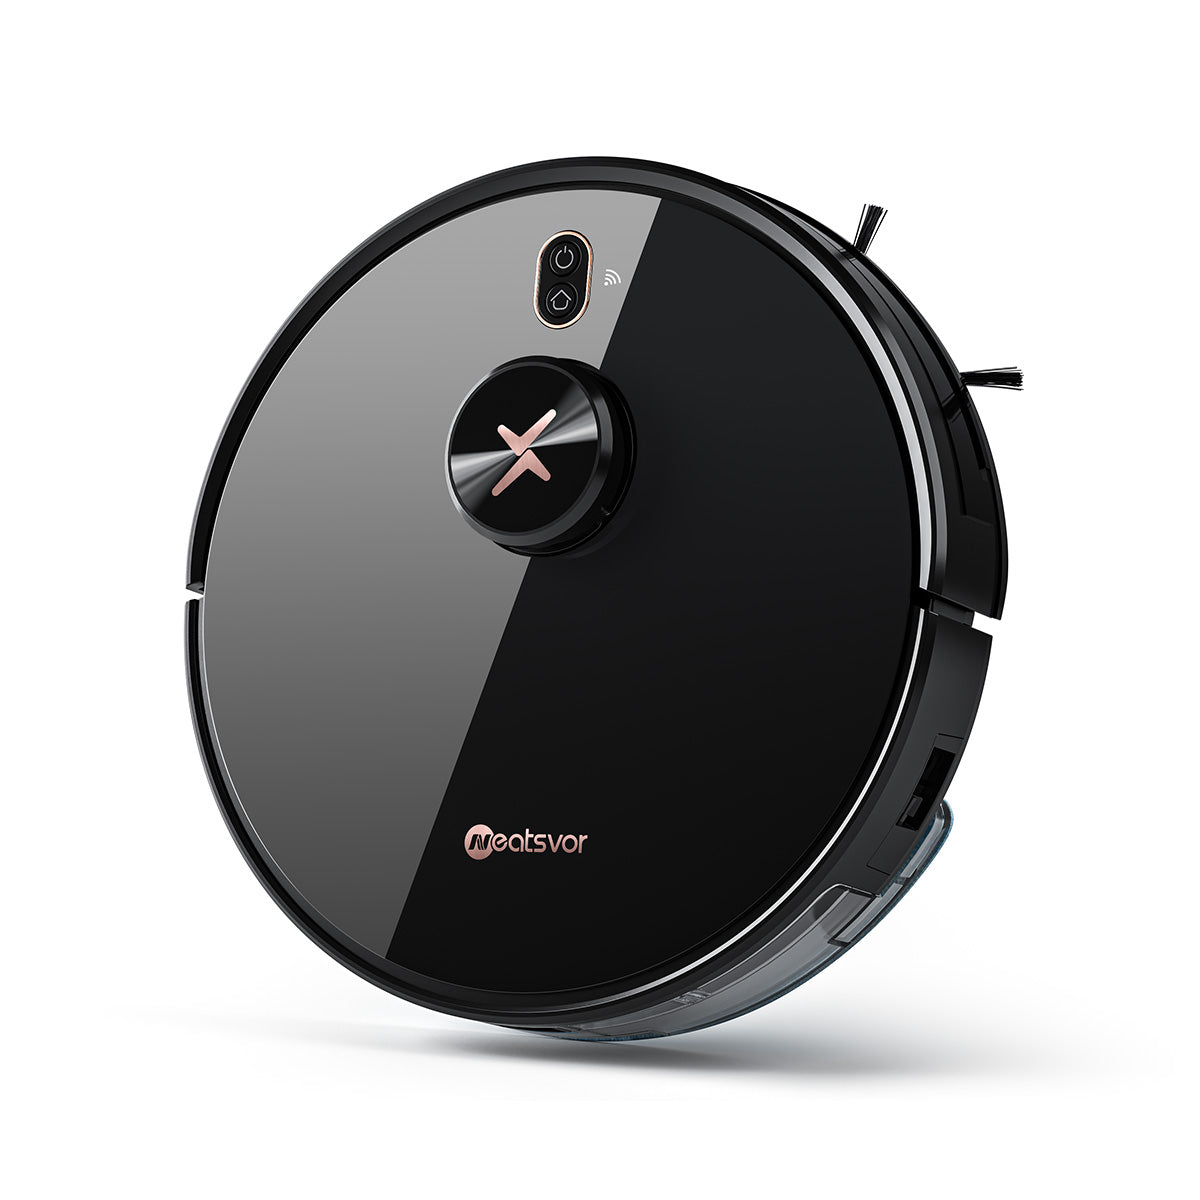 Neatsvor X600Pro Black Robot Vacuum Cleaner